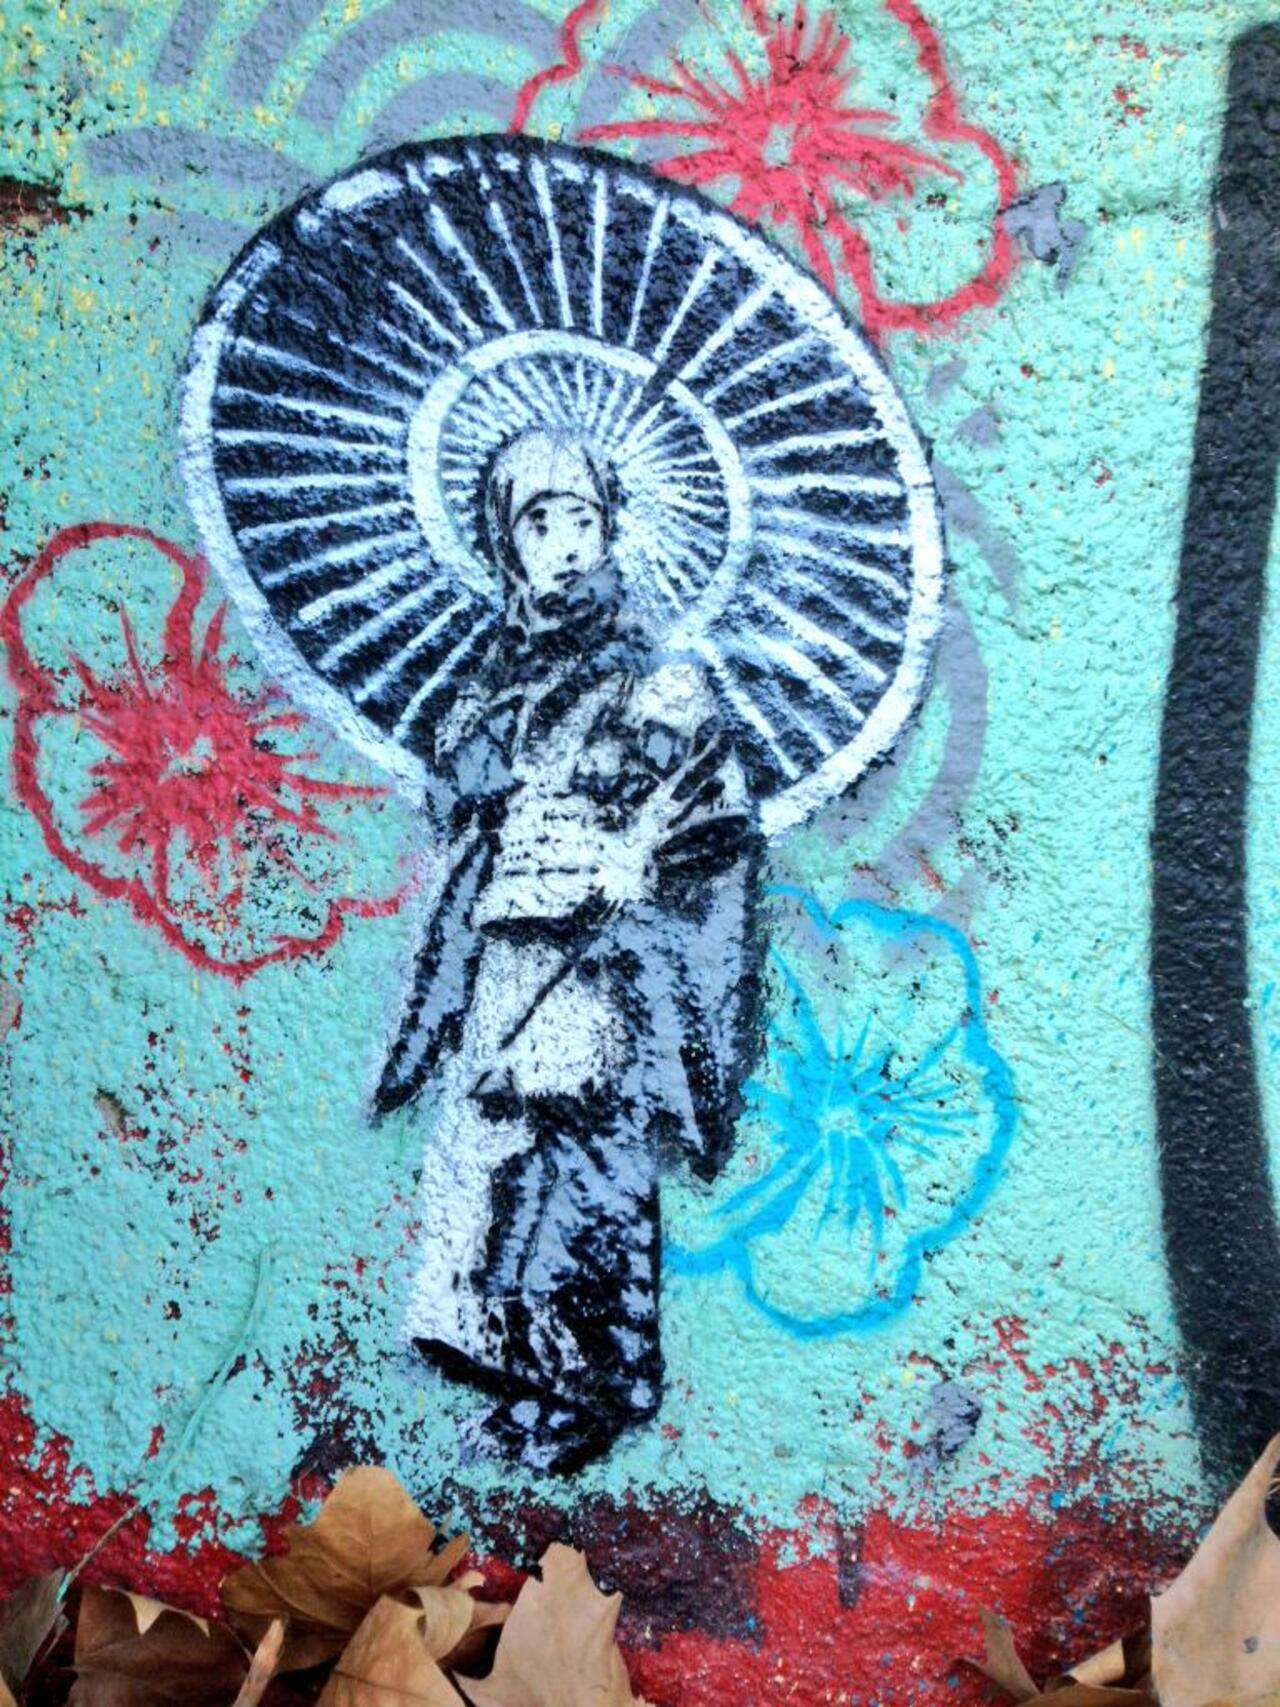 RT @streetartgall: Spotted this tiny stencil in the bottom corner of a wall yesterday... #streetart #graffiti #stencil #art http://t.co/knt6uQcPhL